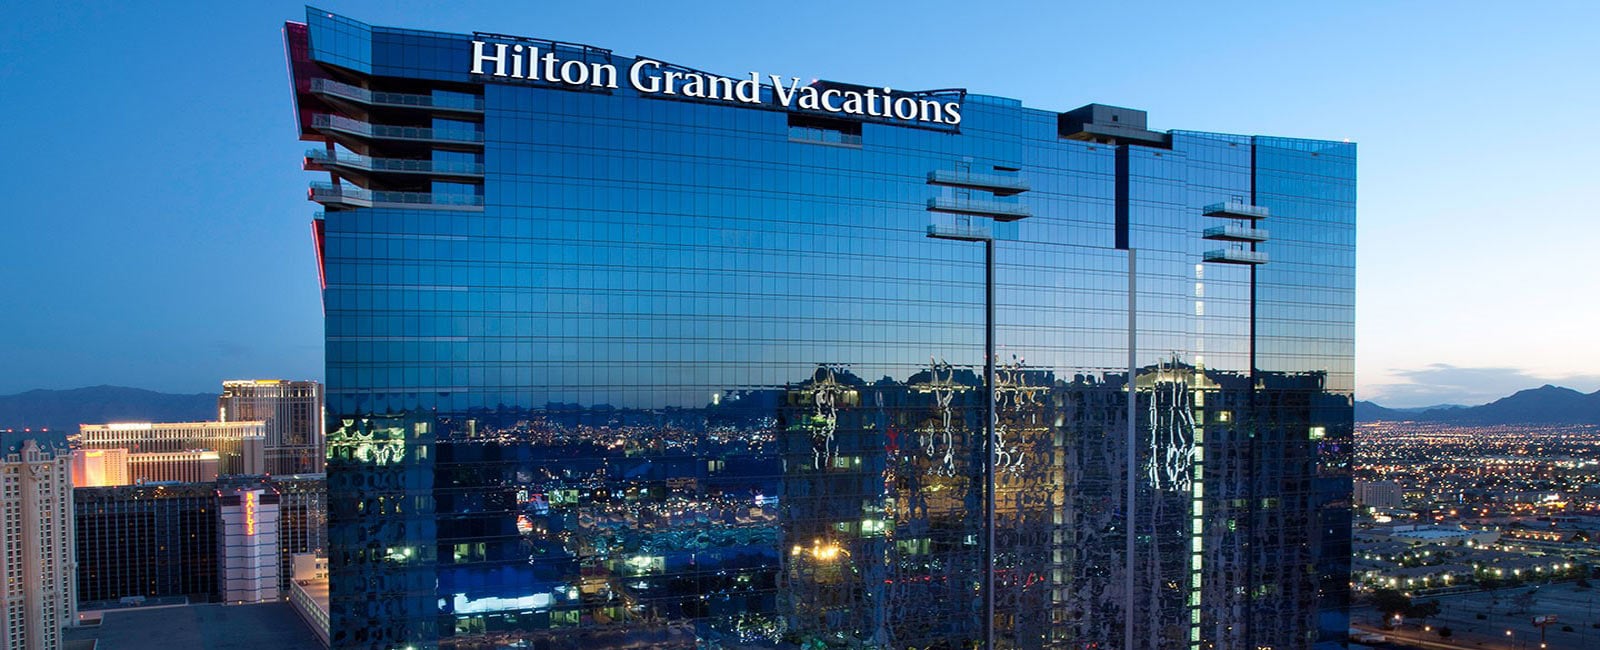 hilton grand vacations timeshare presentation locations